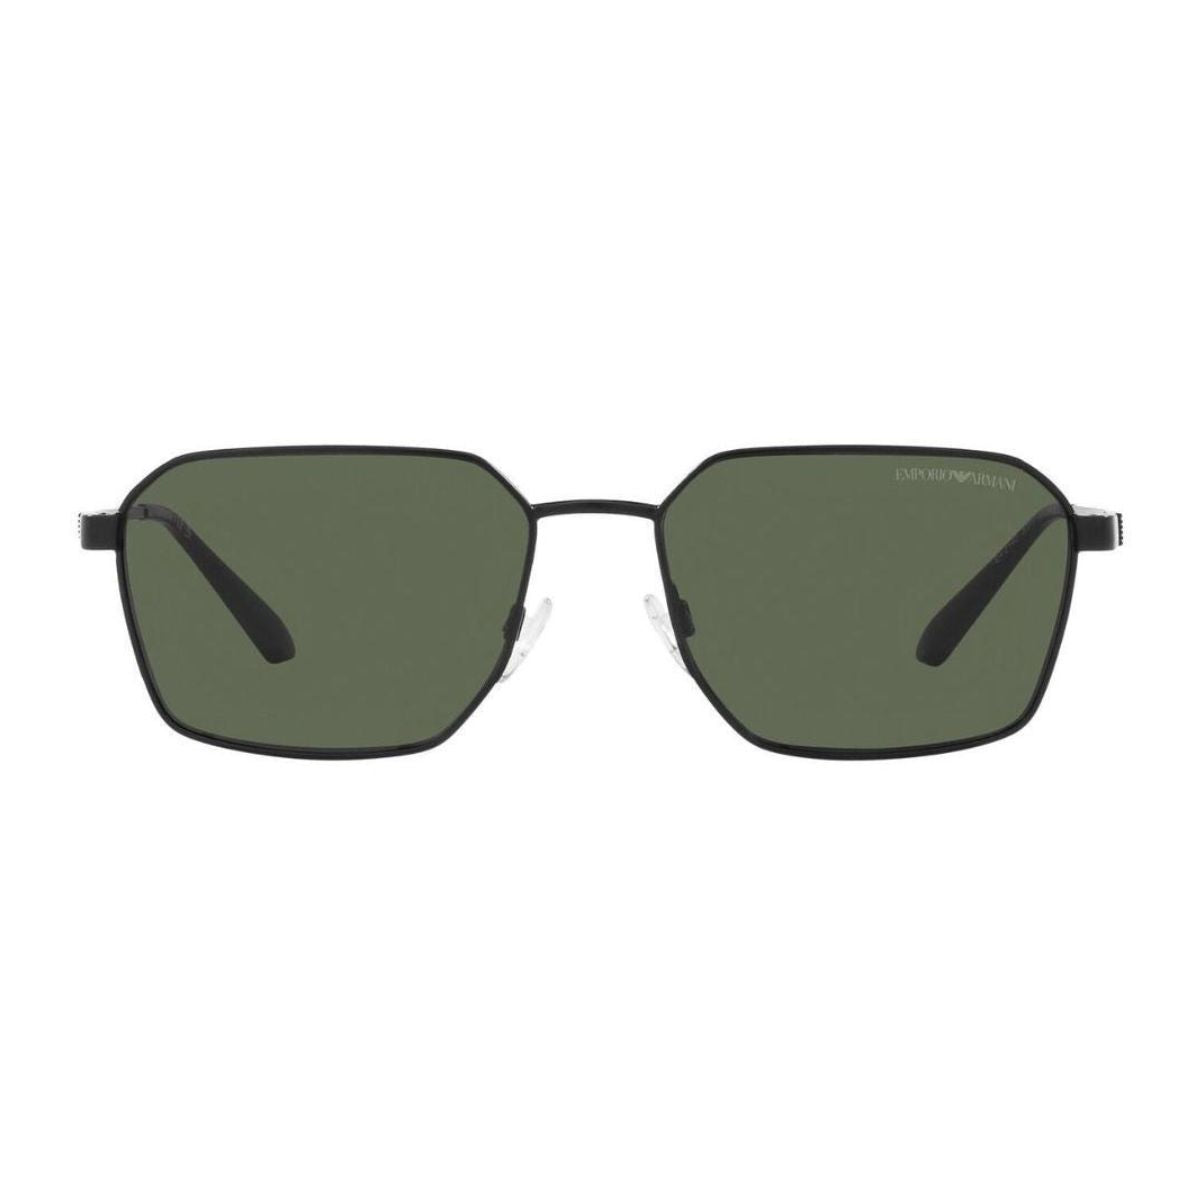 "Buy Emporio Armani EA 2140 3001/71 Green Color Sunglass For Men's At Optorium"